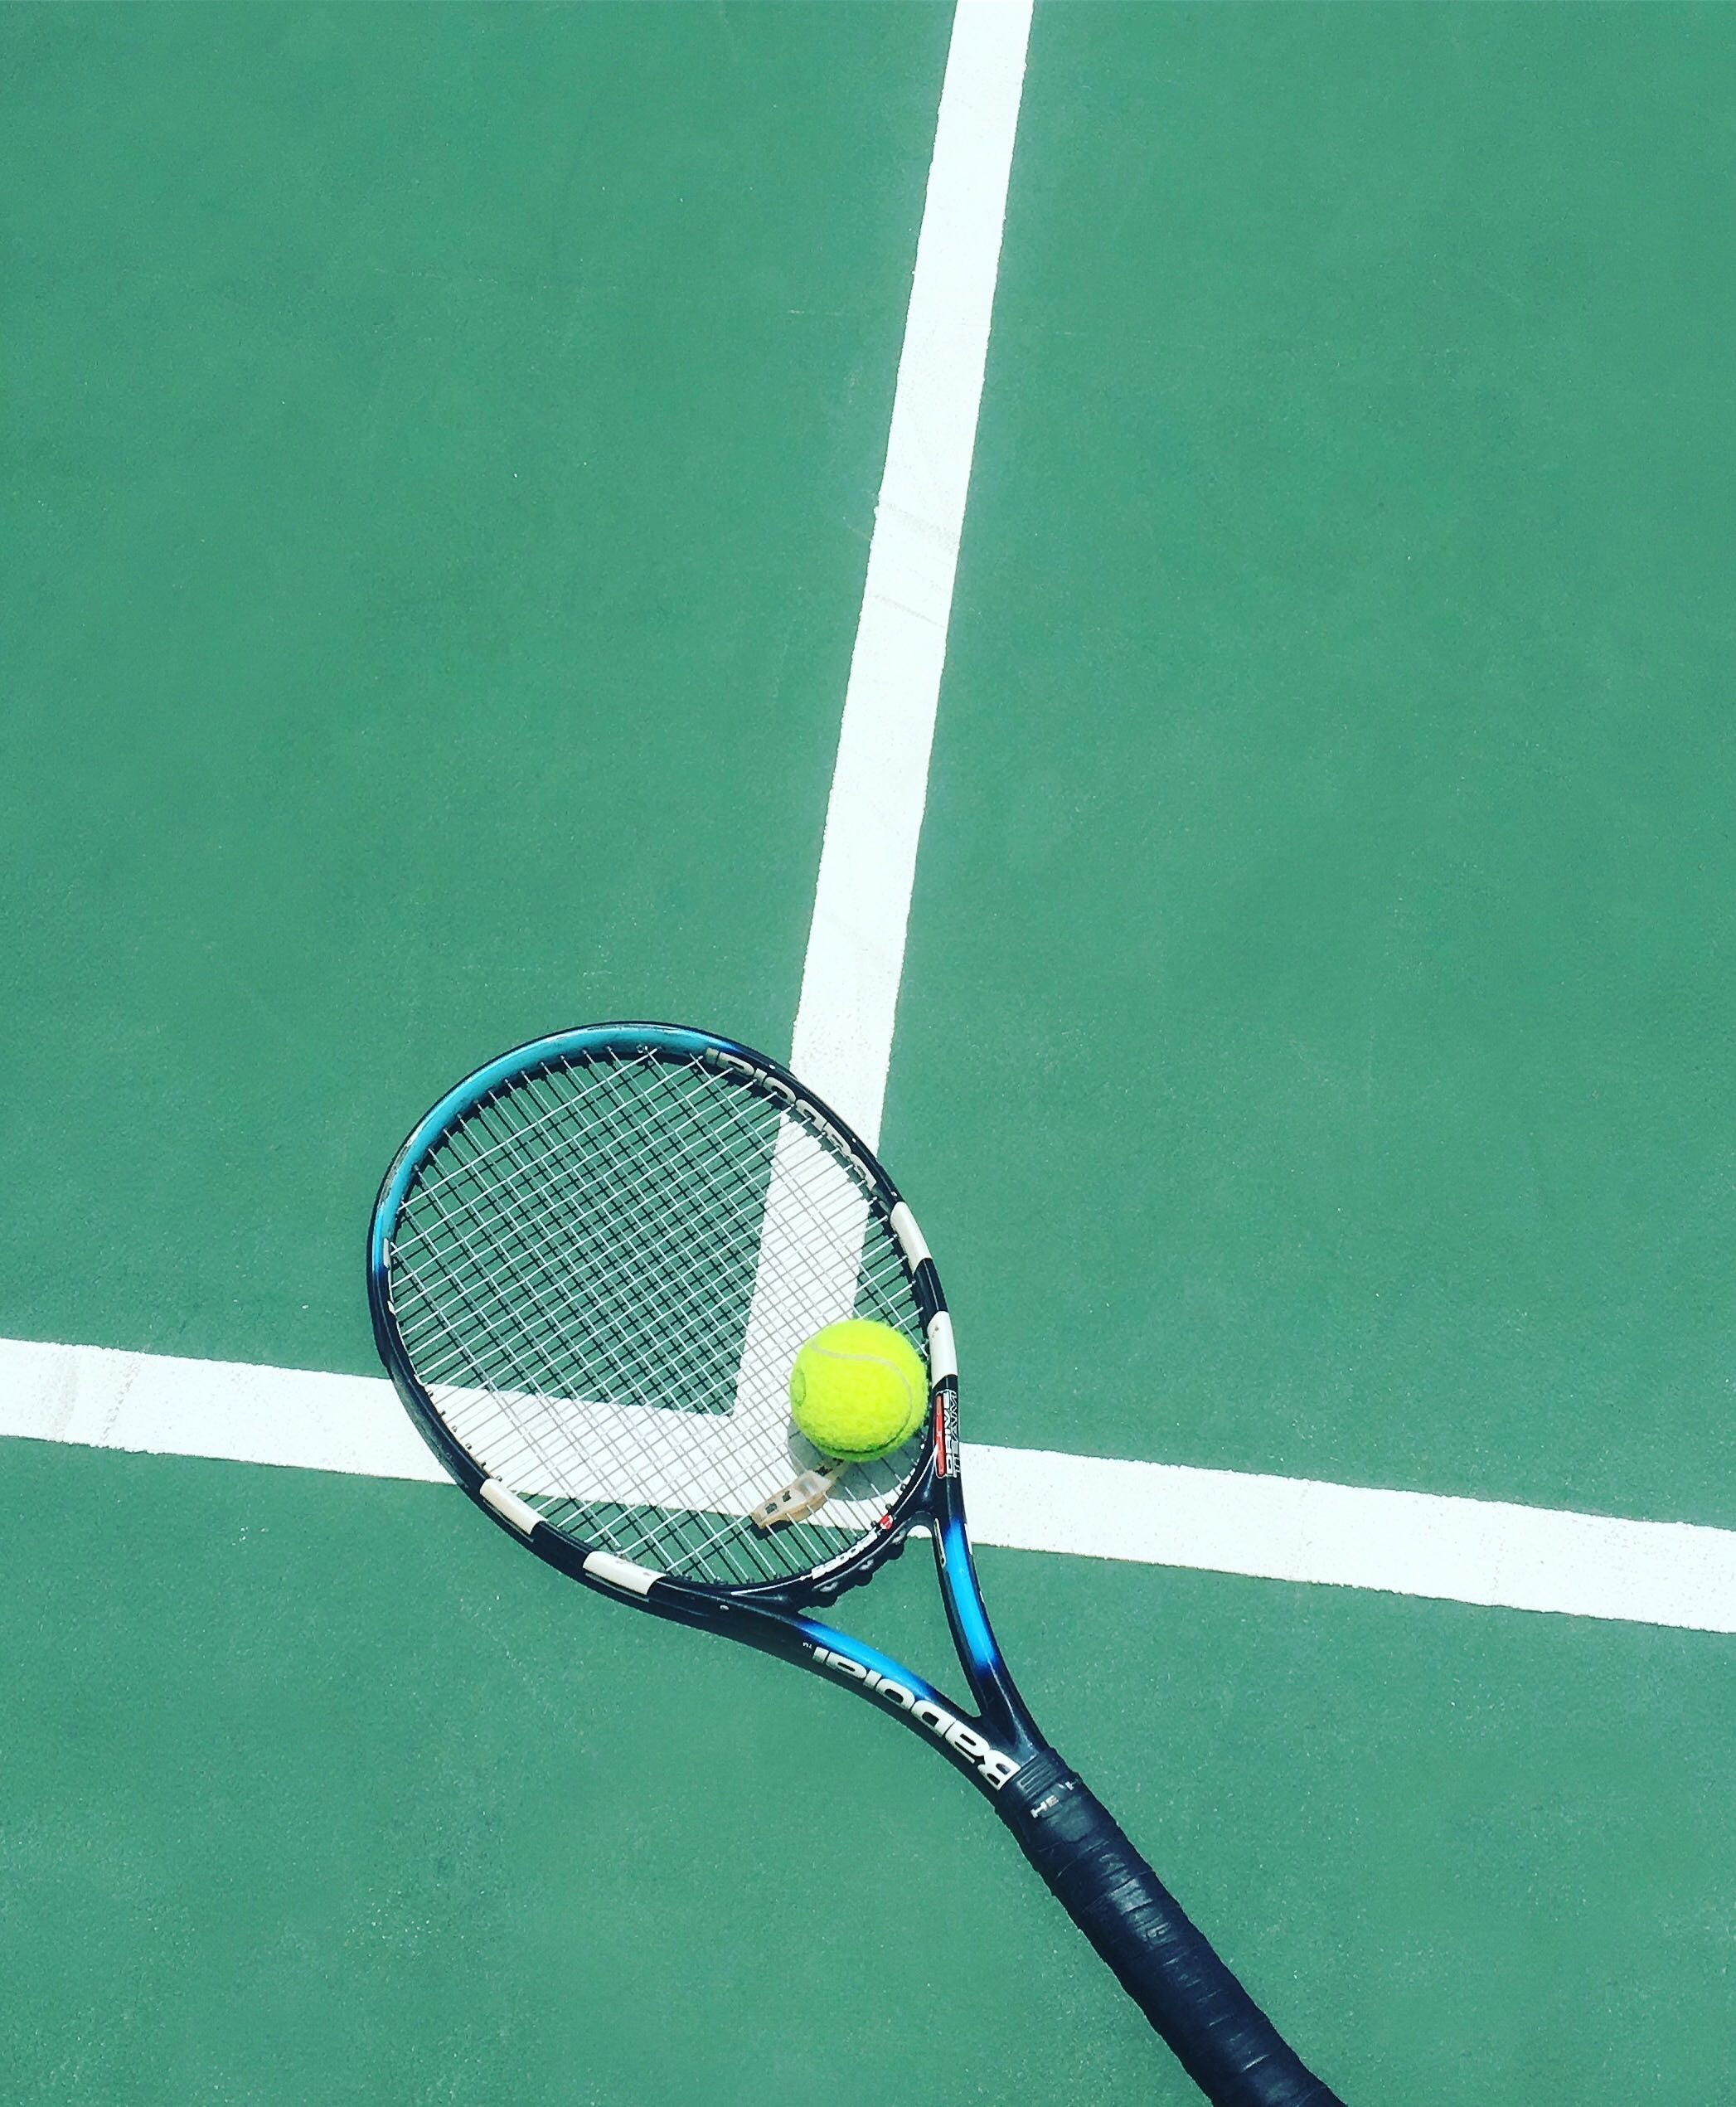 The World's Greatest Tennis Tournaments | by Chris Doerr | Medium